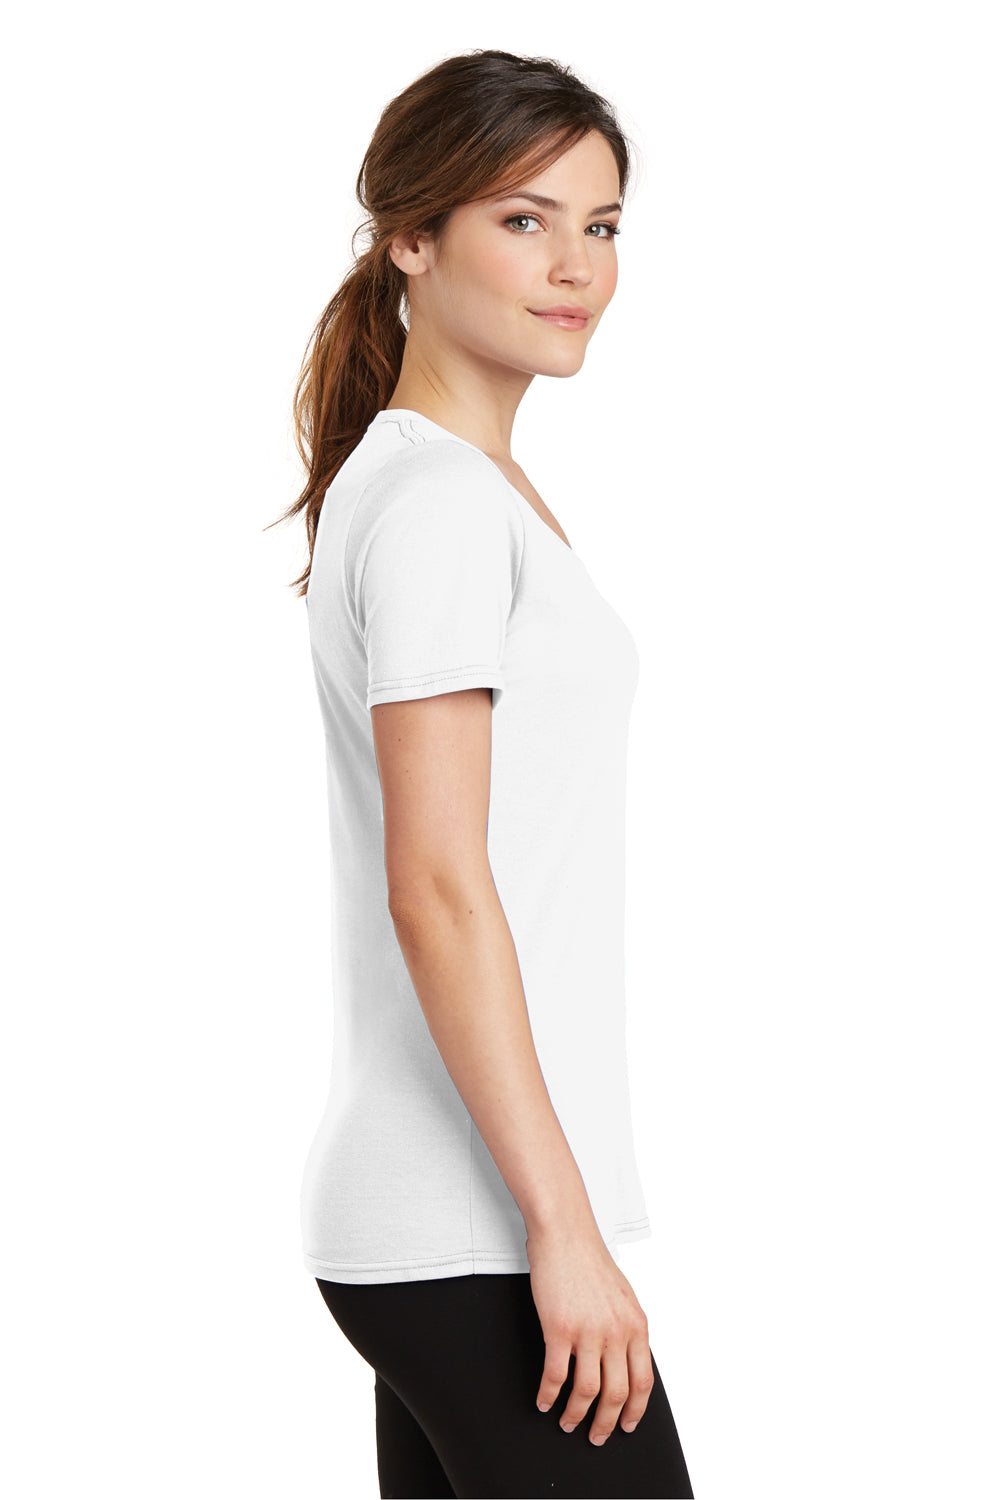 Port & Company LPC381V Womens Dry Zone Performance Moisture Wicking Short Sleeve V-Neck T-Shirt White Side